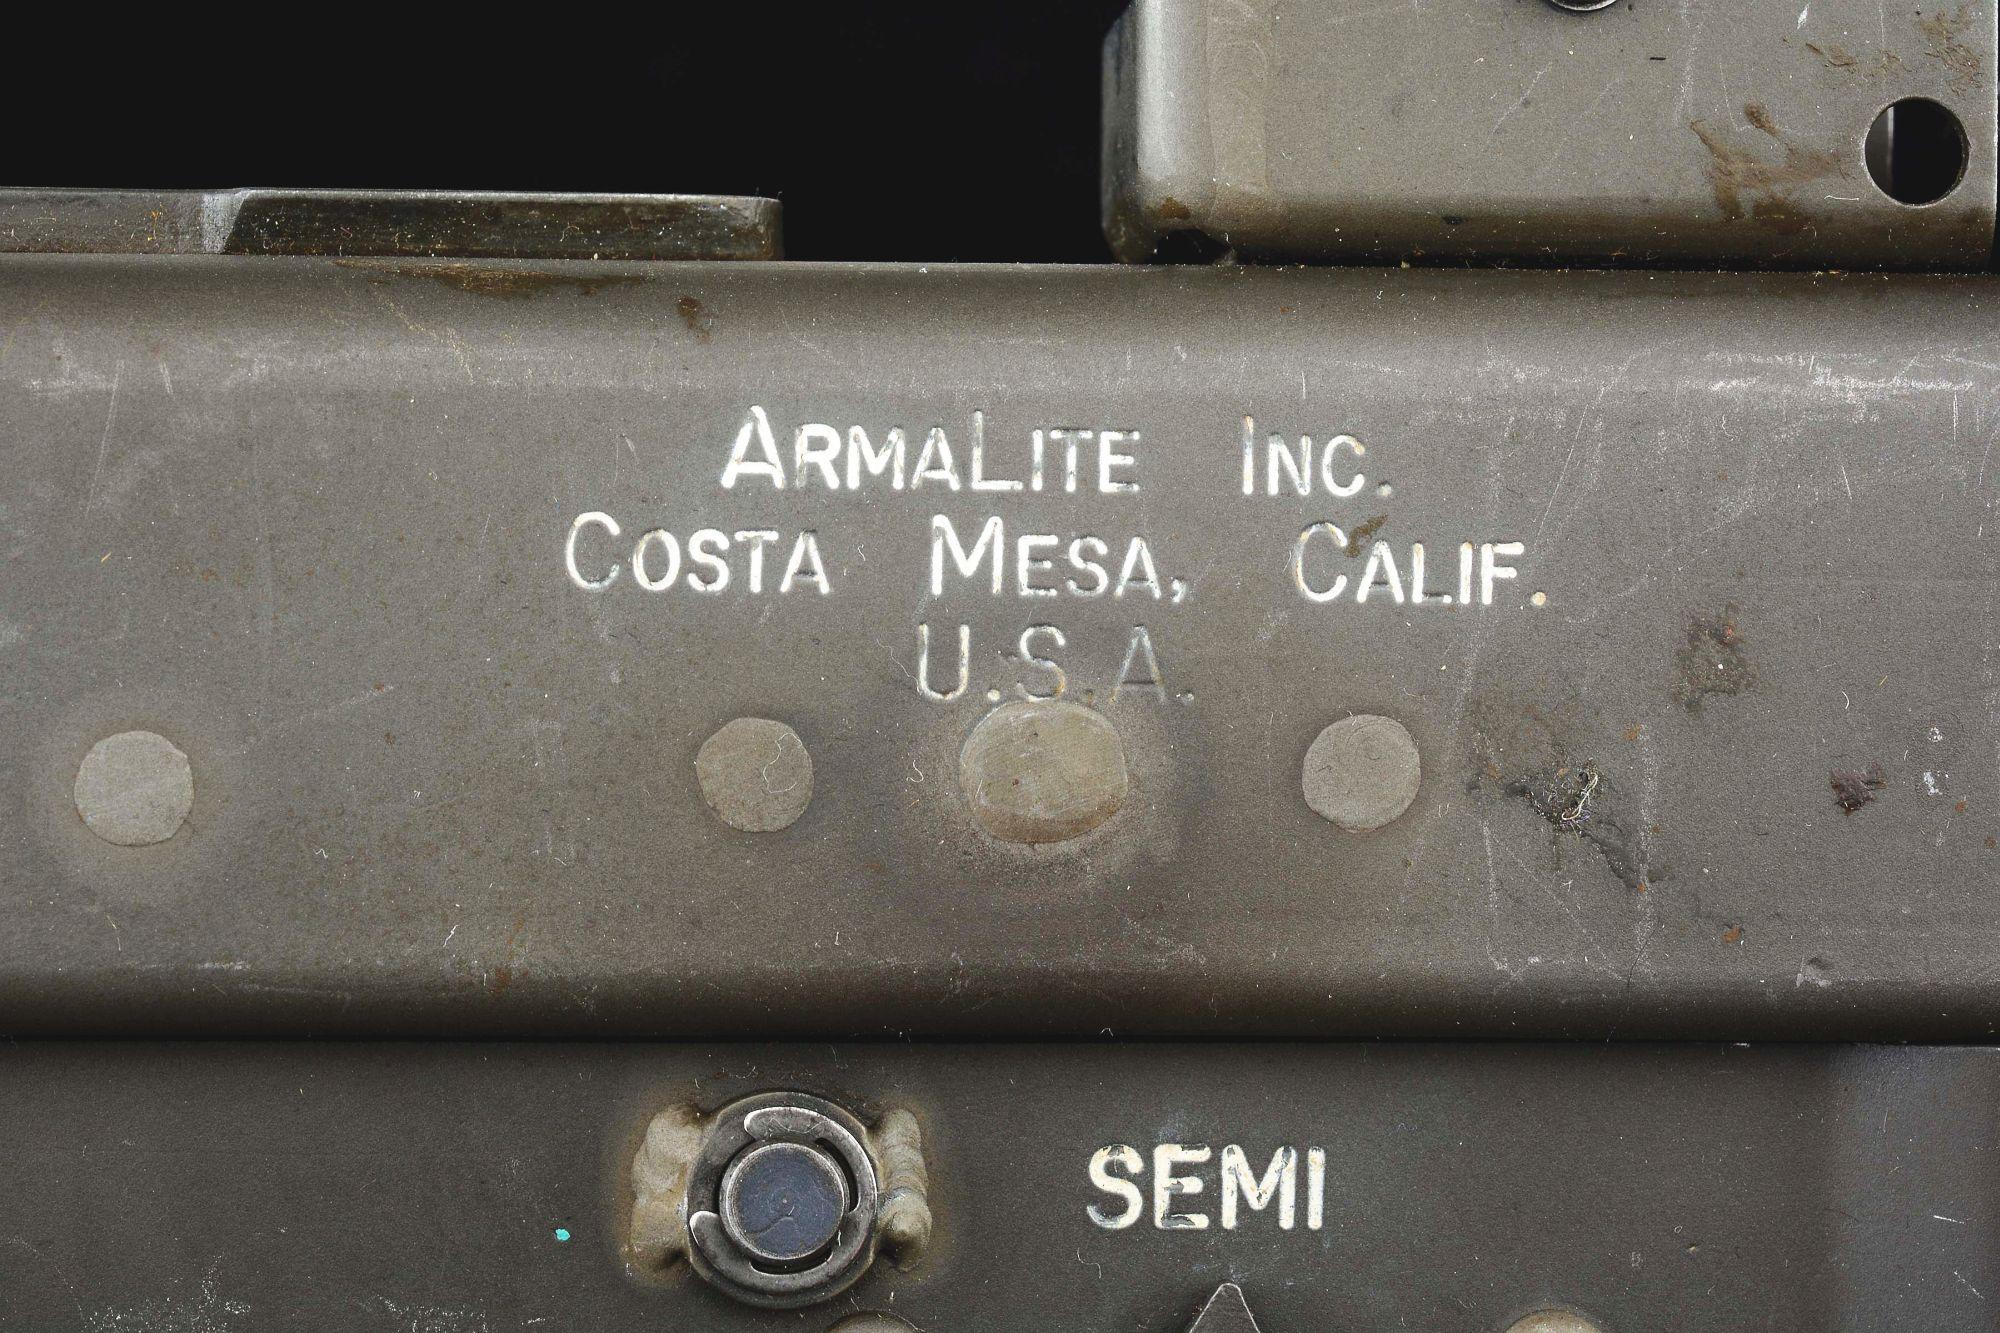 (N) Extremely Early Armalite AR-18 Machine Gun (CURIO & RELIC).